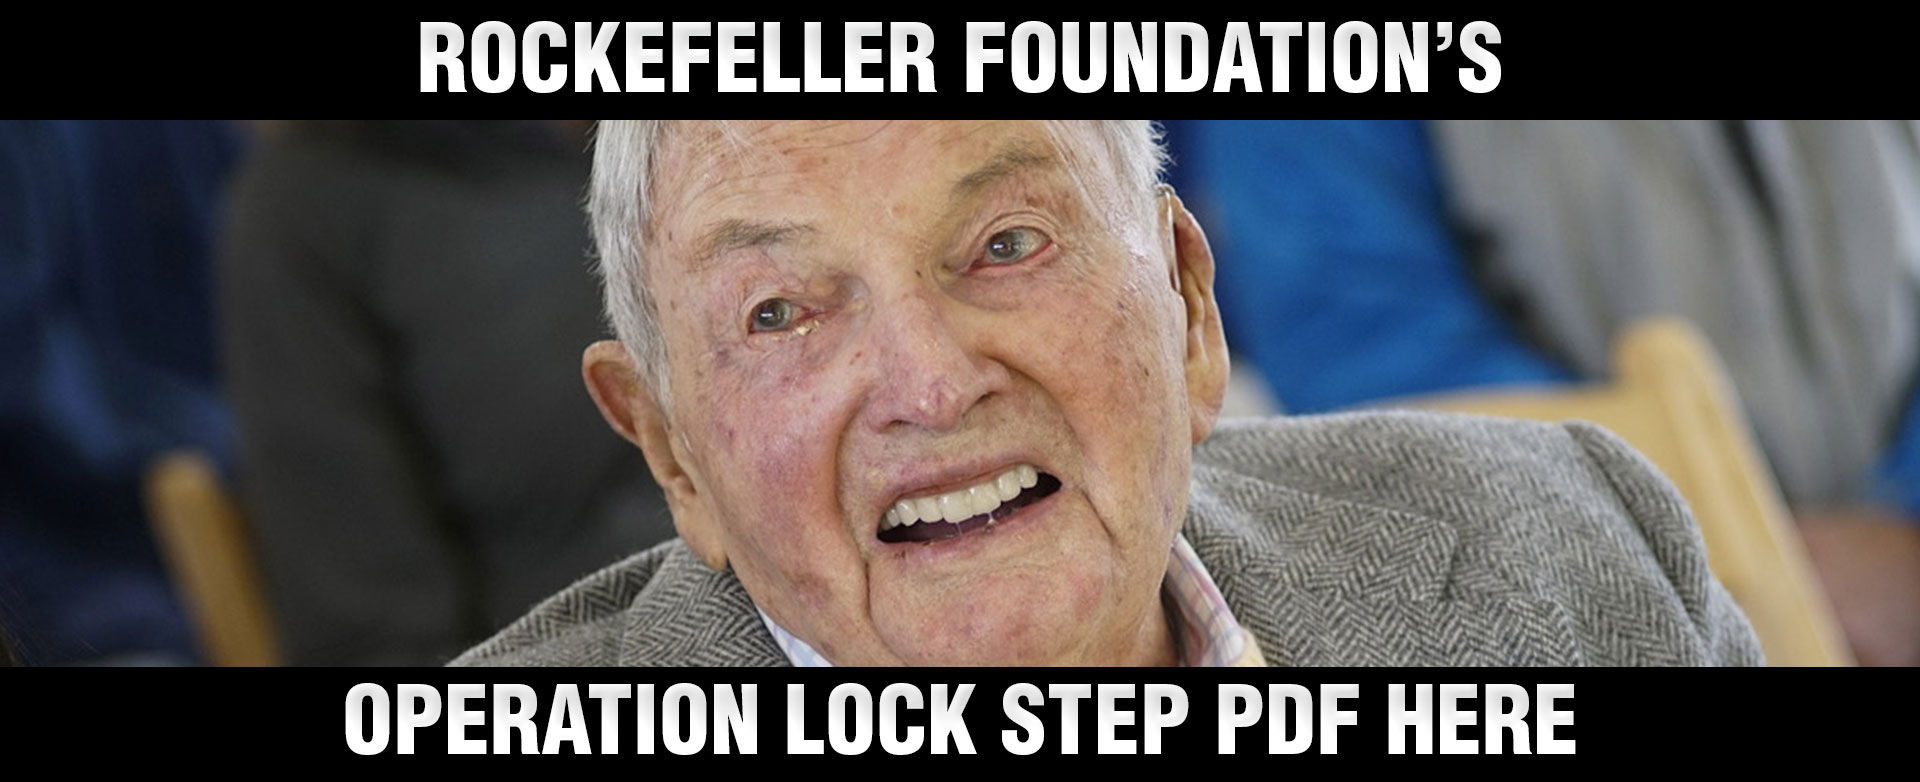 MyPatriotsNetwork-ICYMI: Rockefeller Foundation’s Operation Lock Step PDF Here